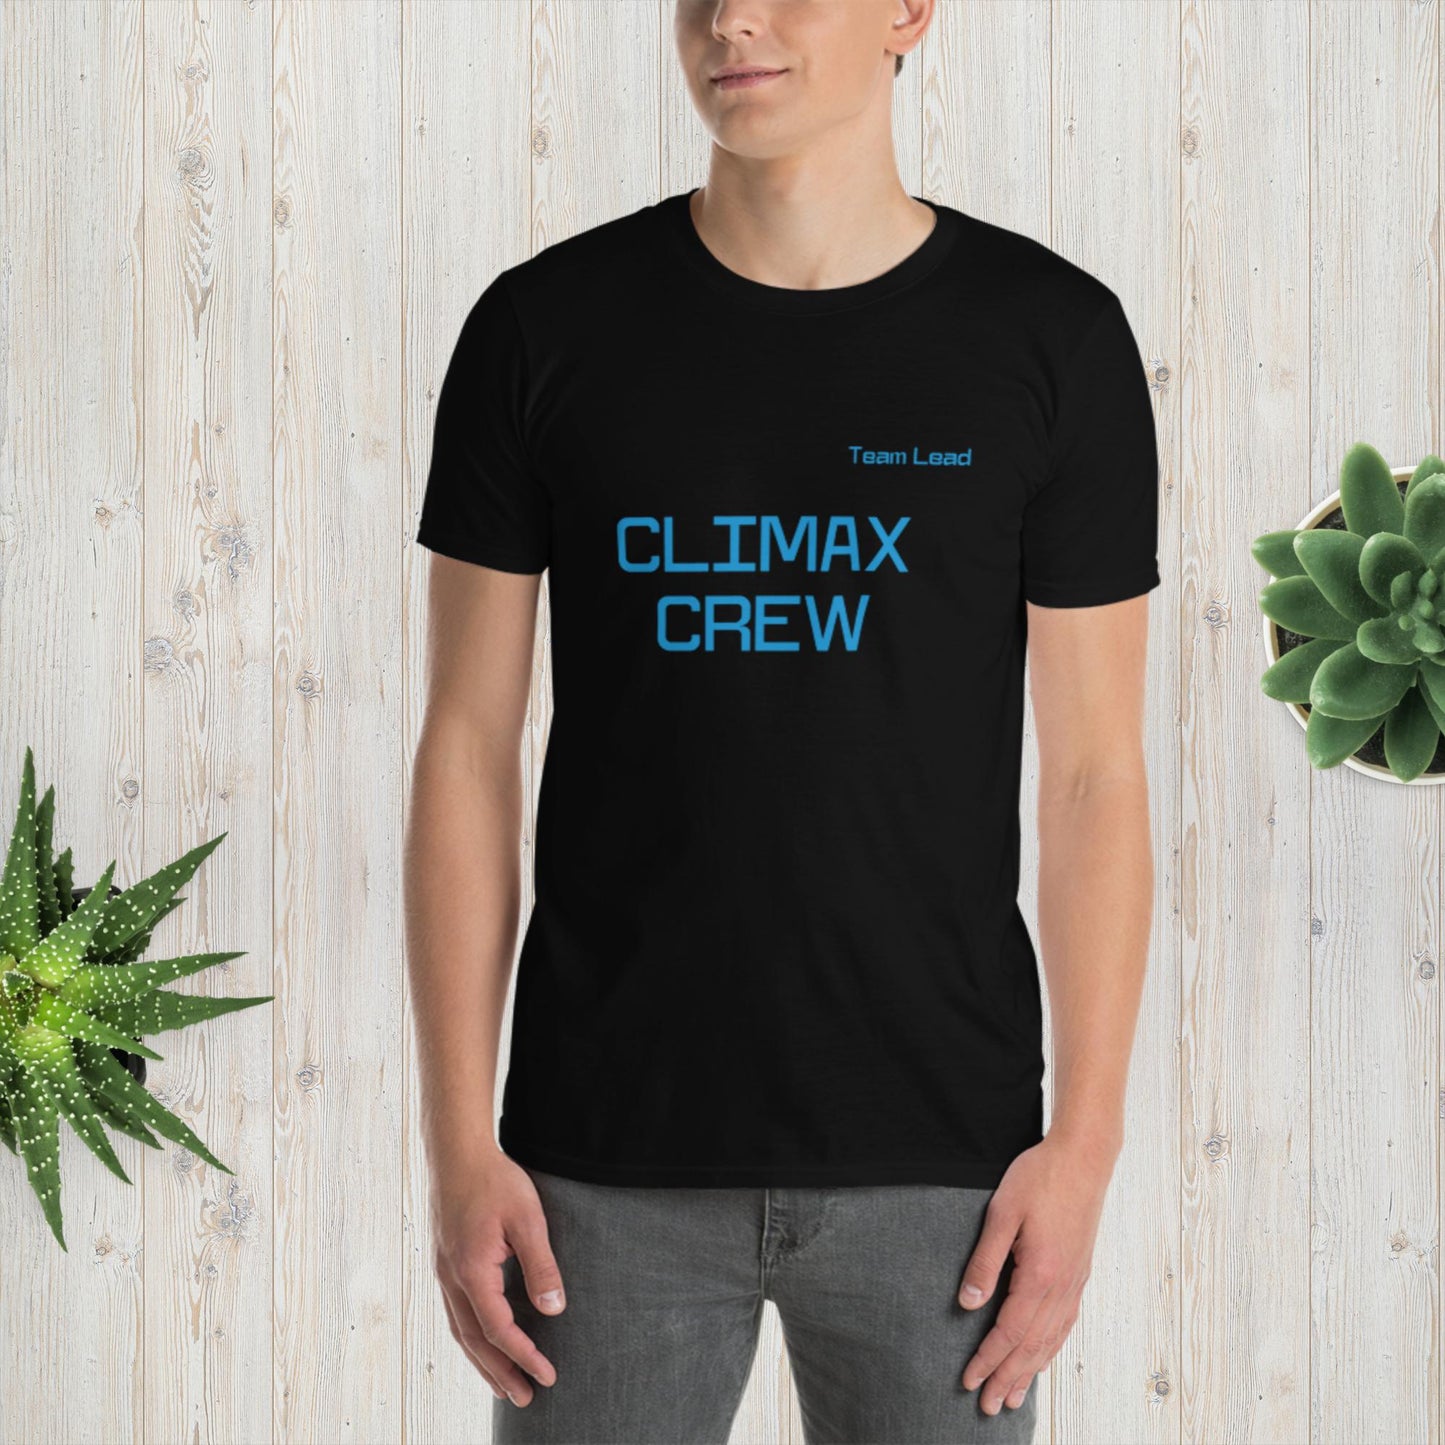 Climax Crew Men's Shirt